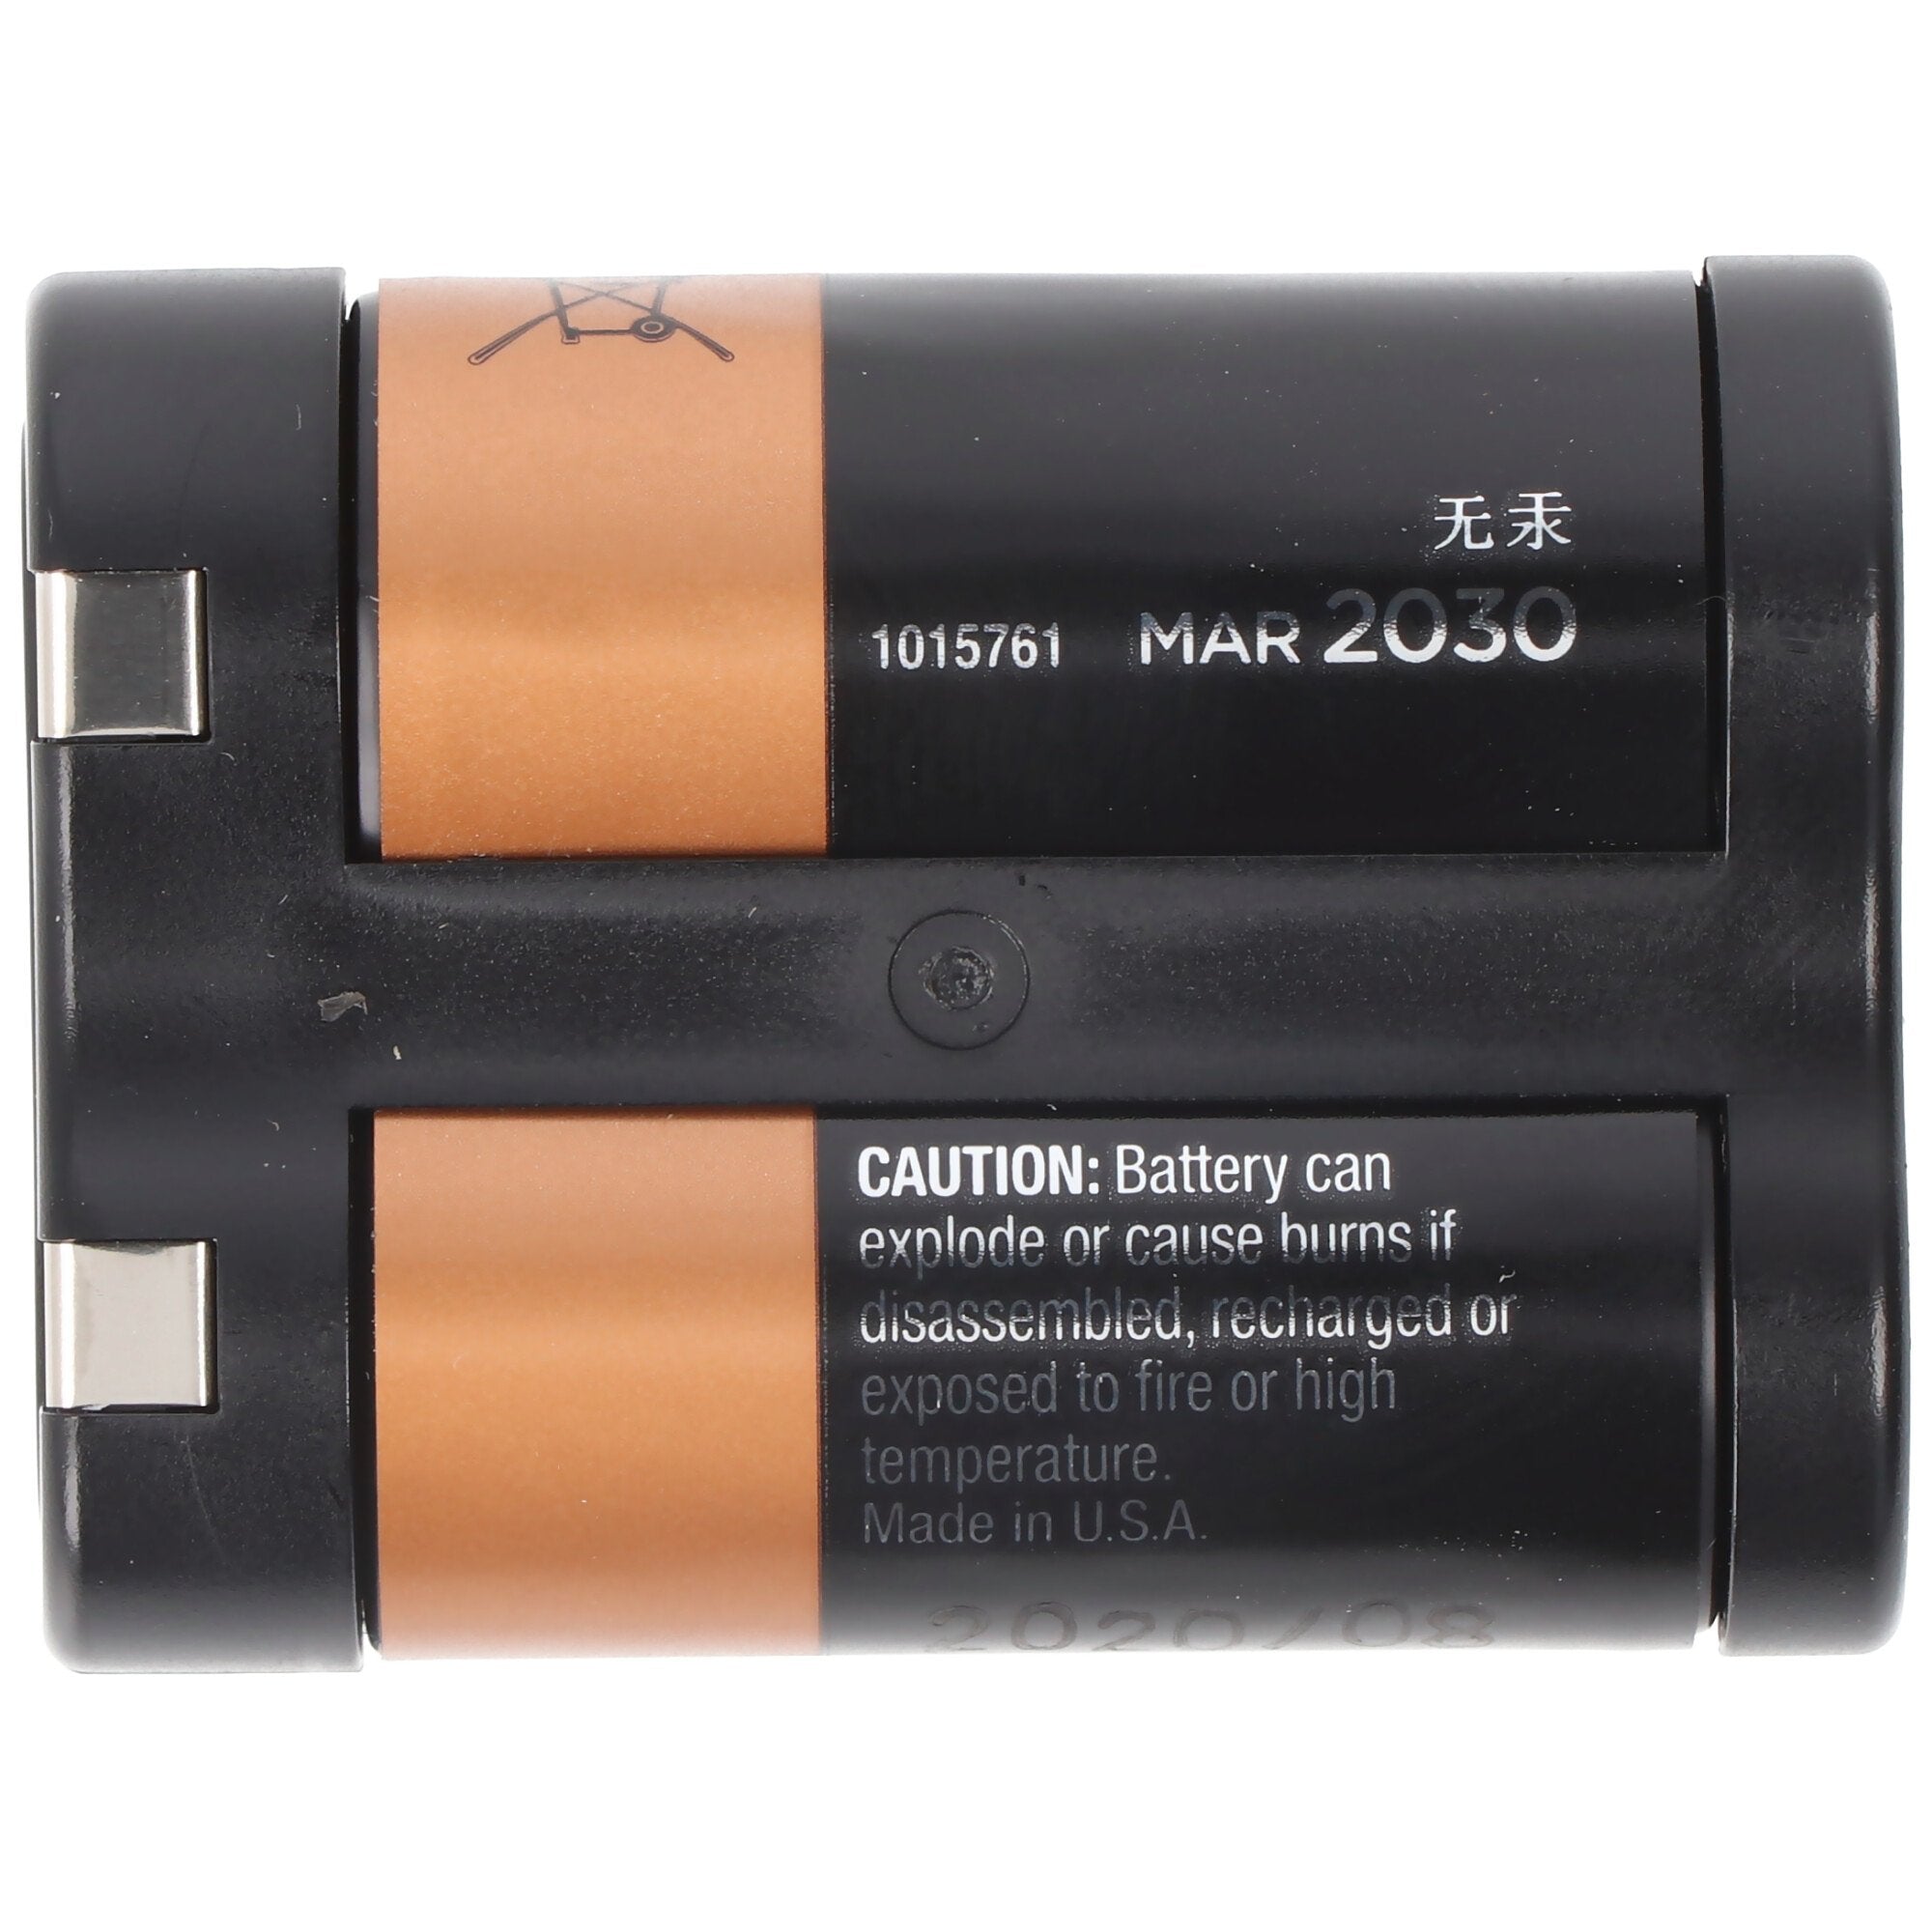 Duracell fotobatterij 2CR5 Ultra Lithium 6 volt met enkele blister van 1400 mAh